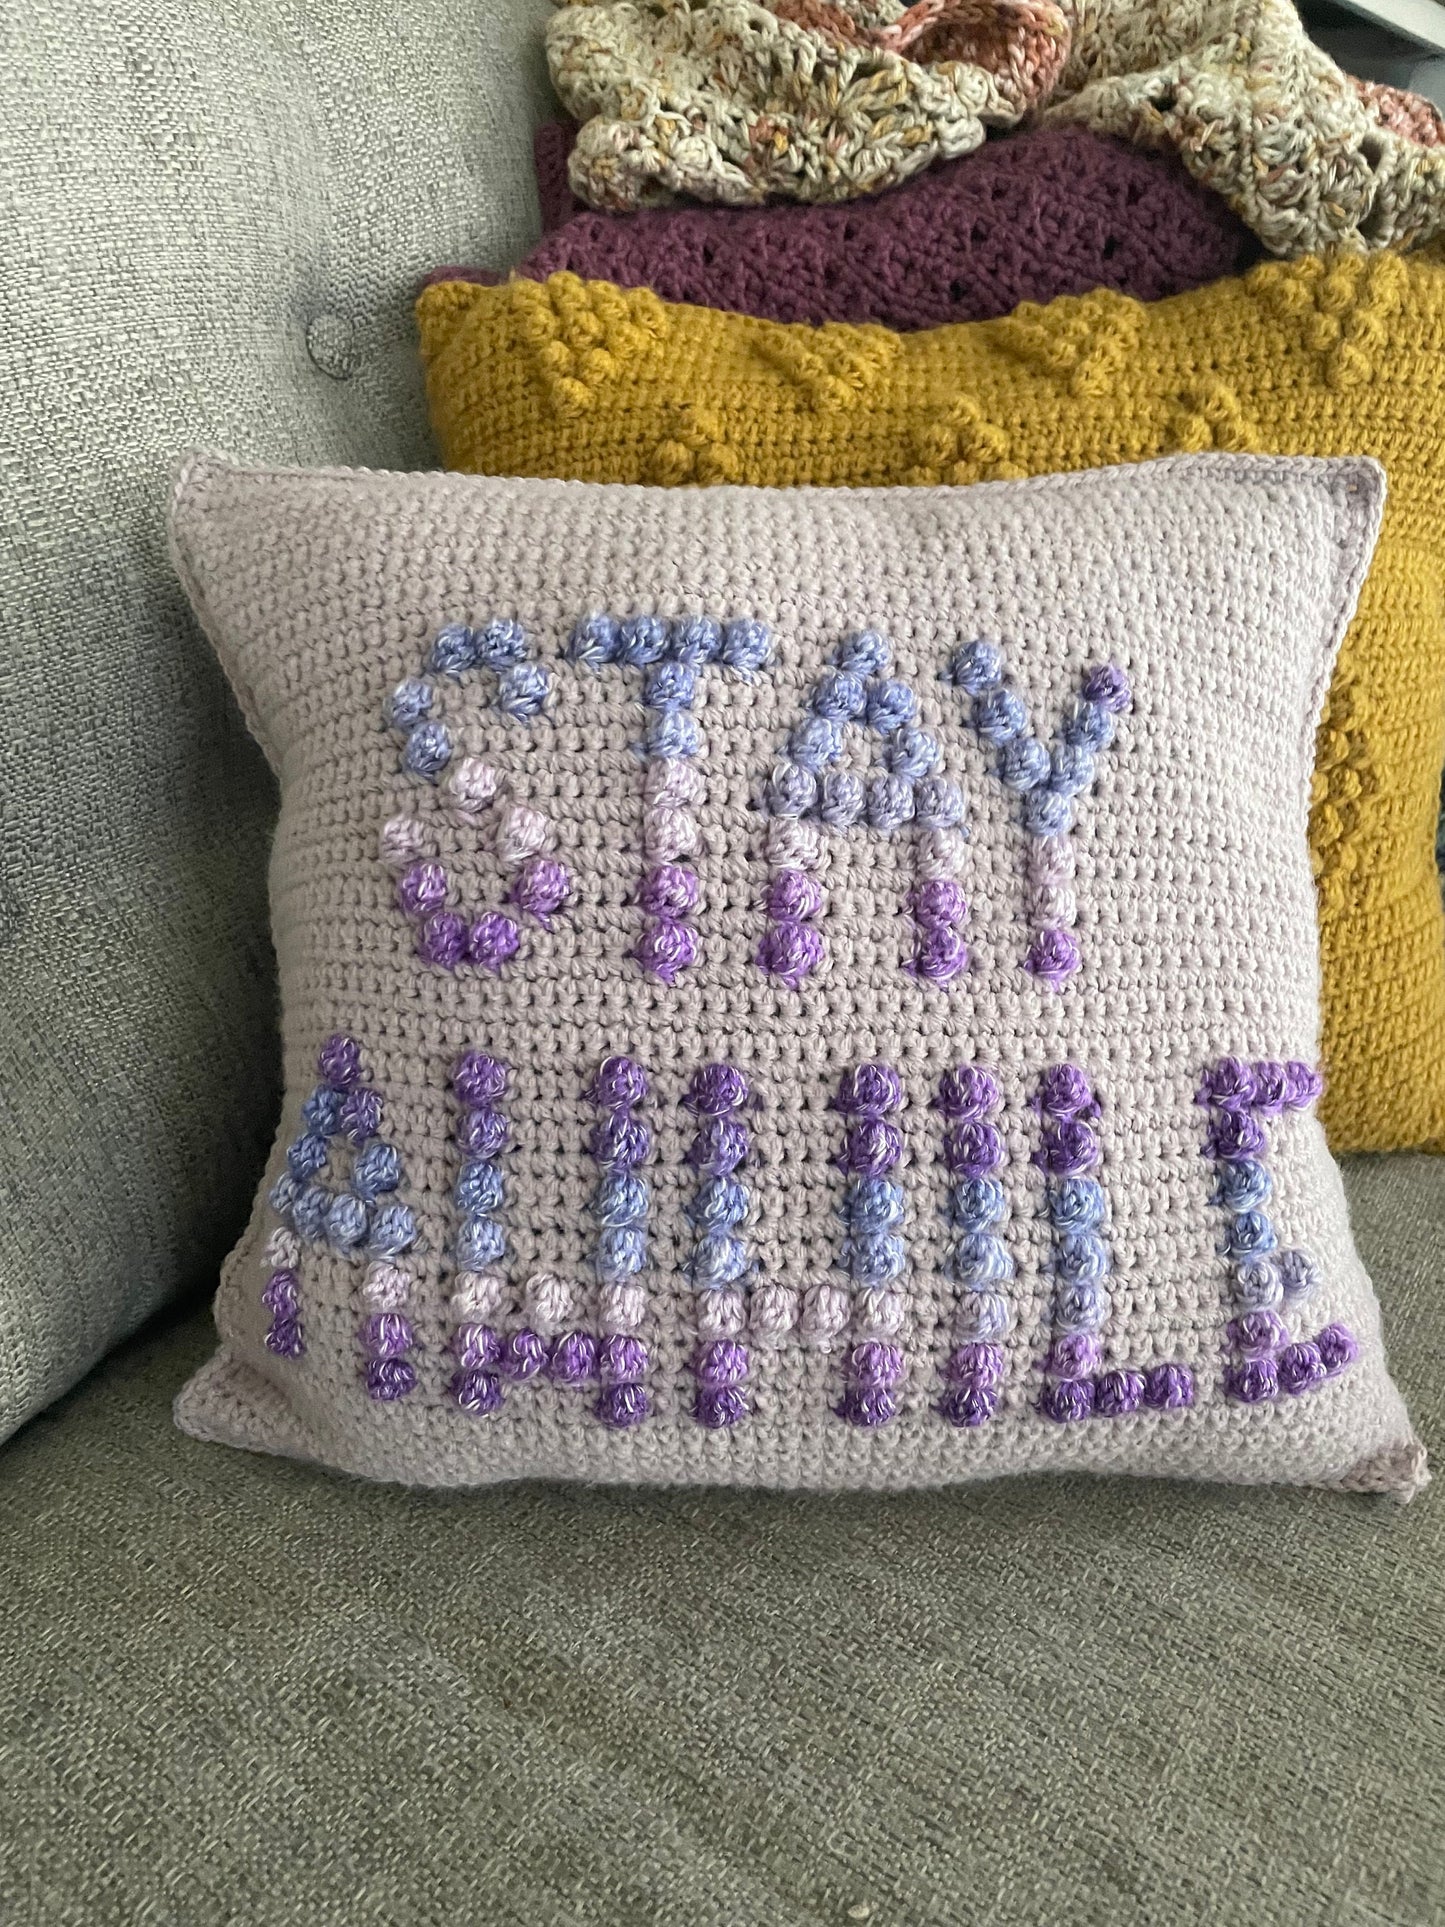 CROCHET PATTERN- Please Leave By 9/ Stay Awhile Reversible Crochet Pillow Pattern